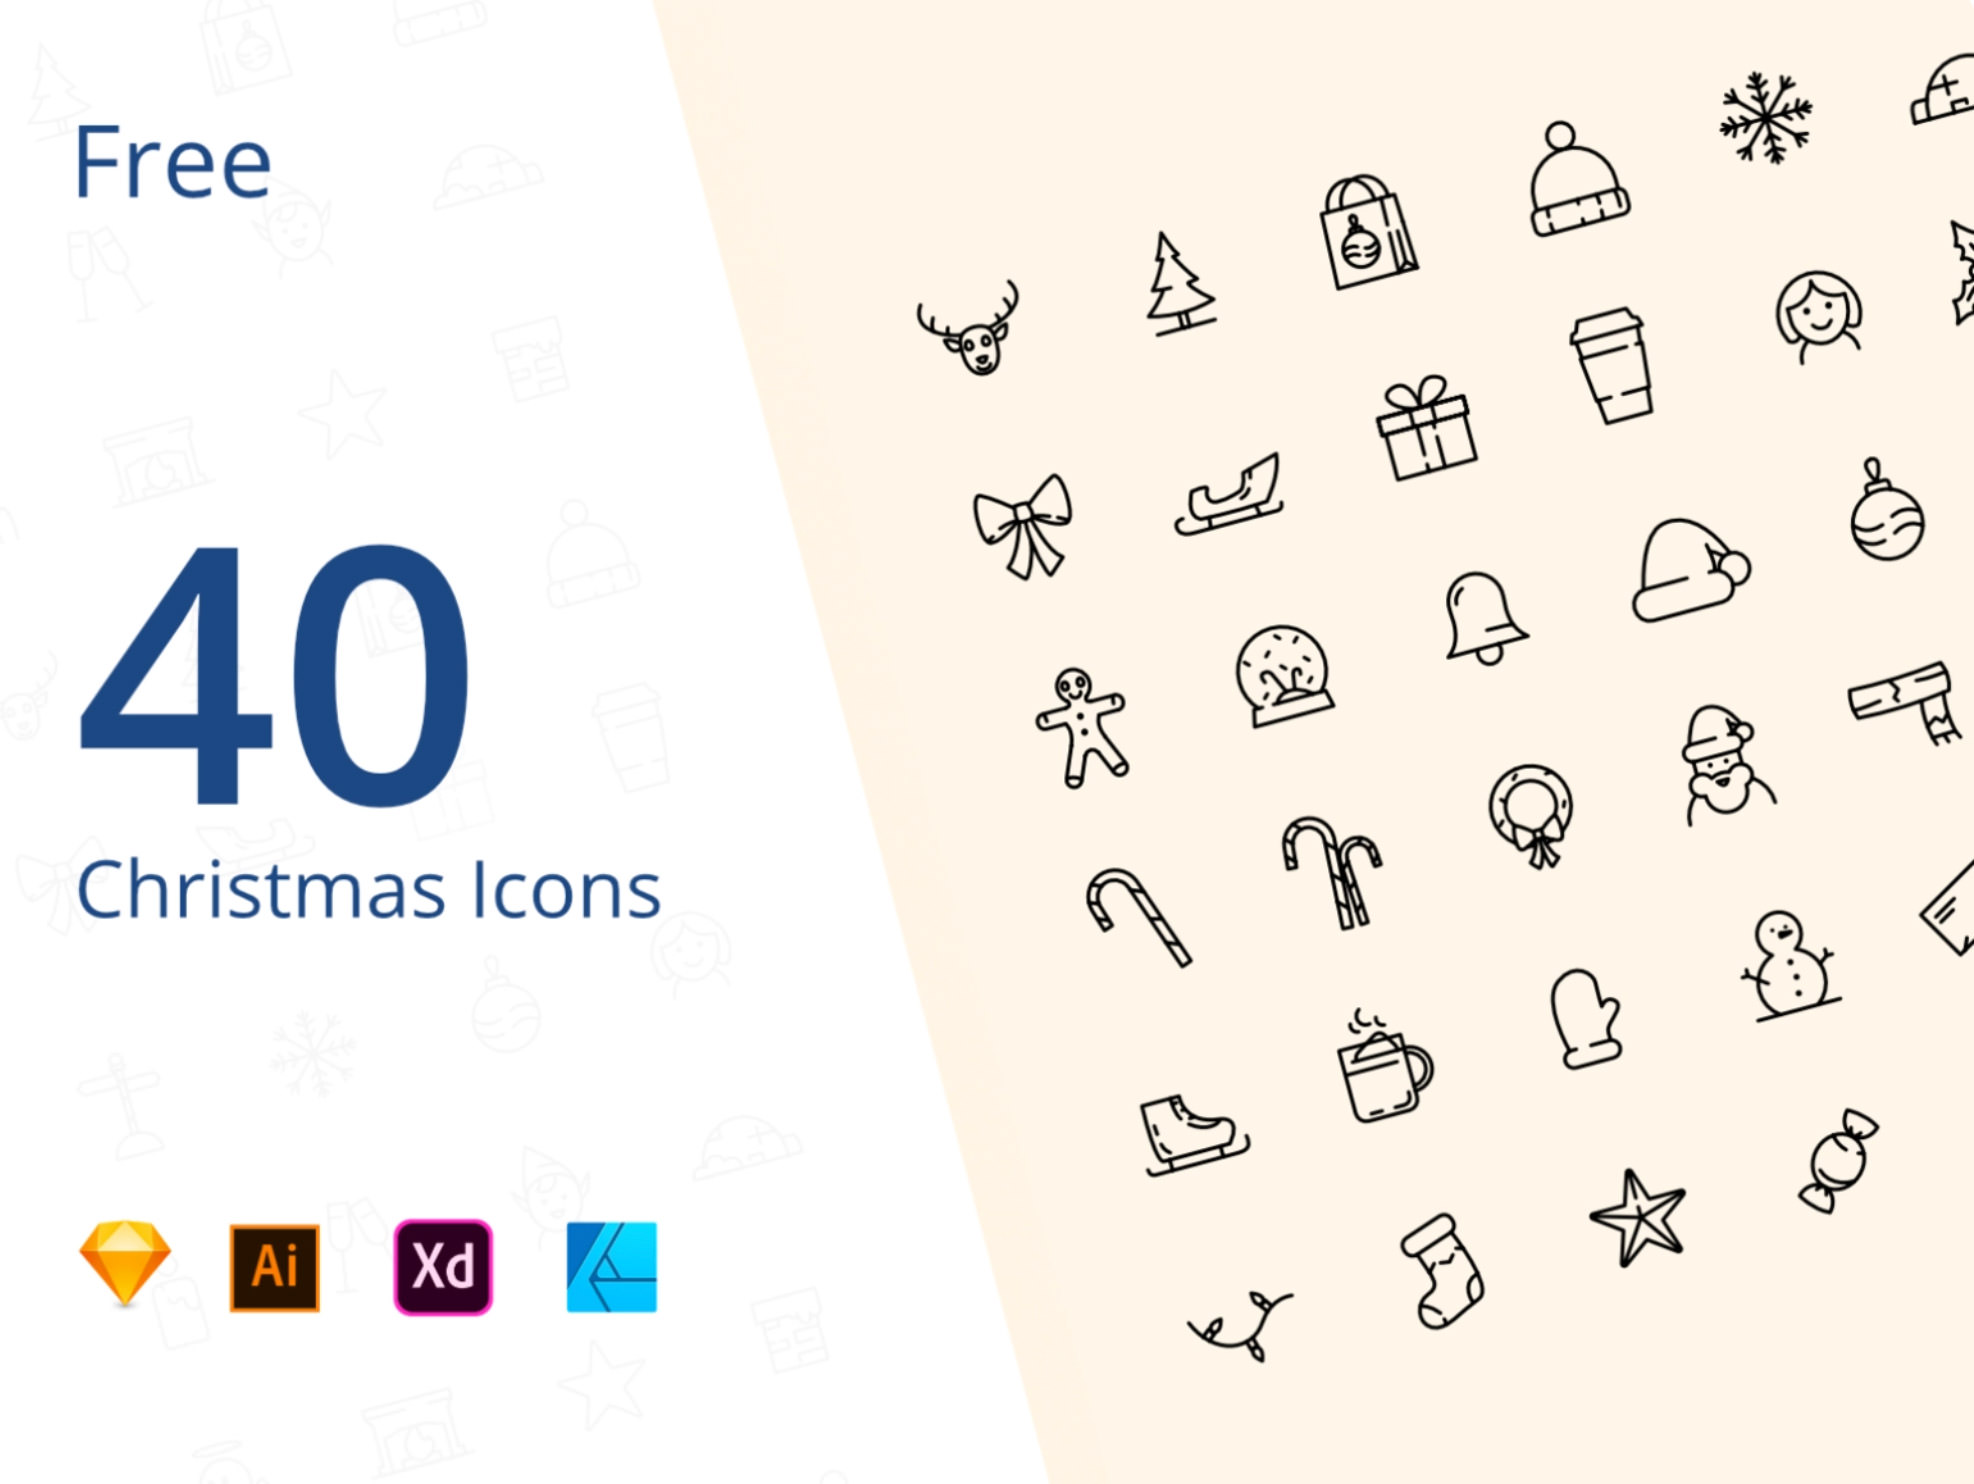 40 Free Christmas icons